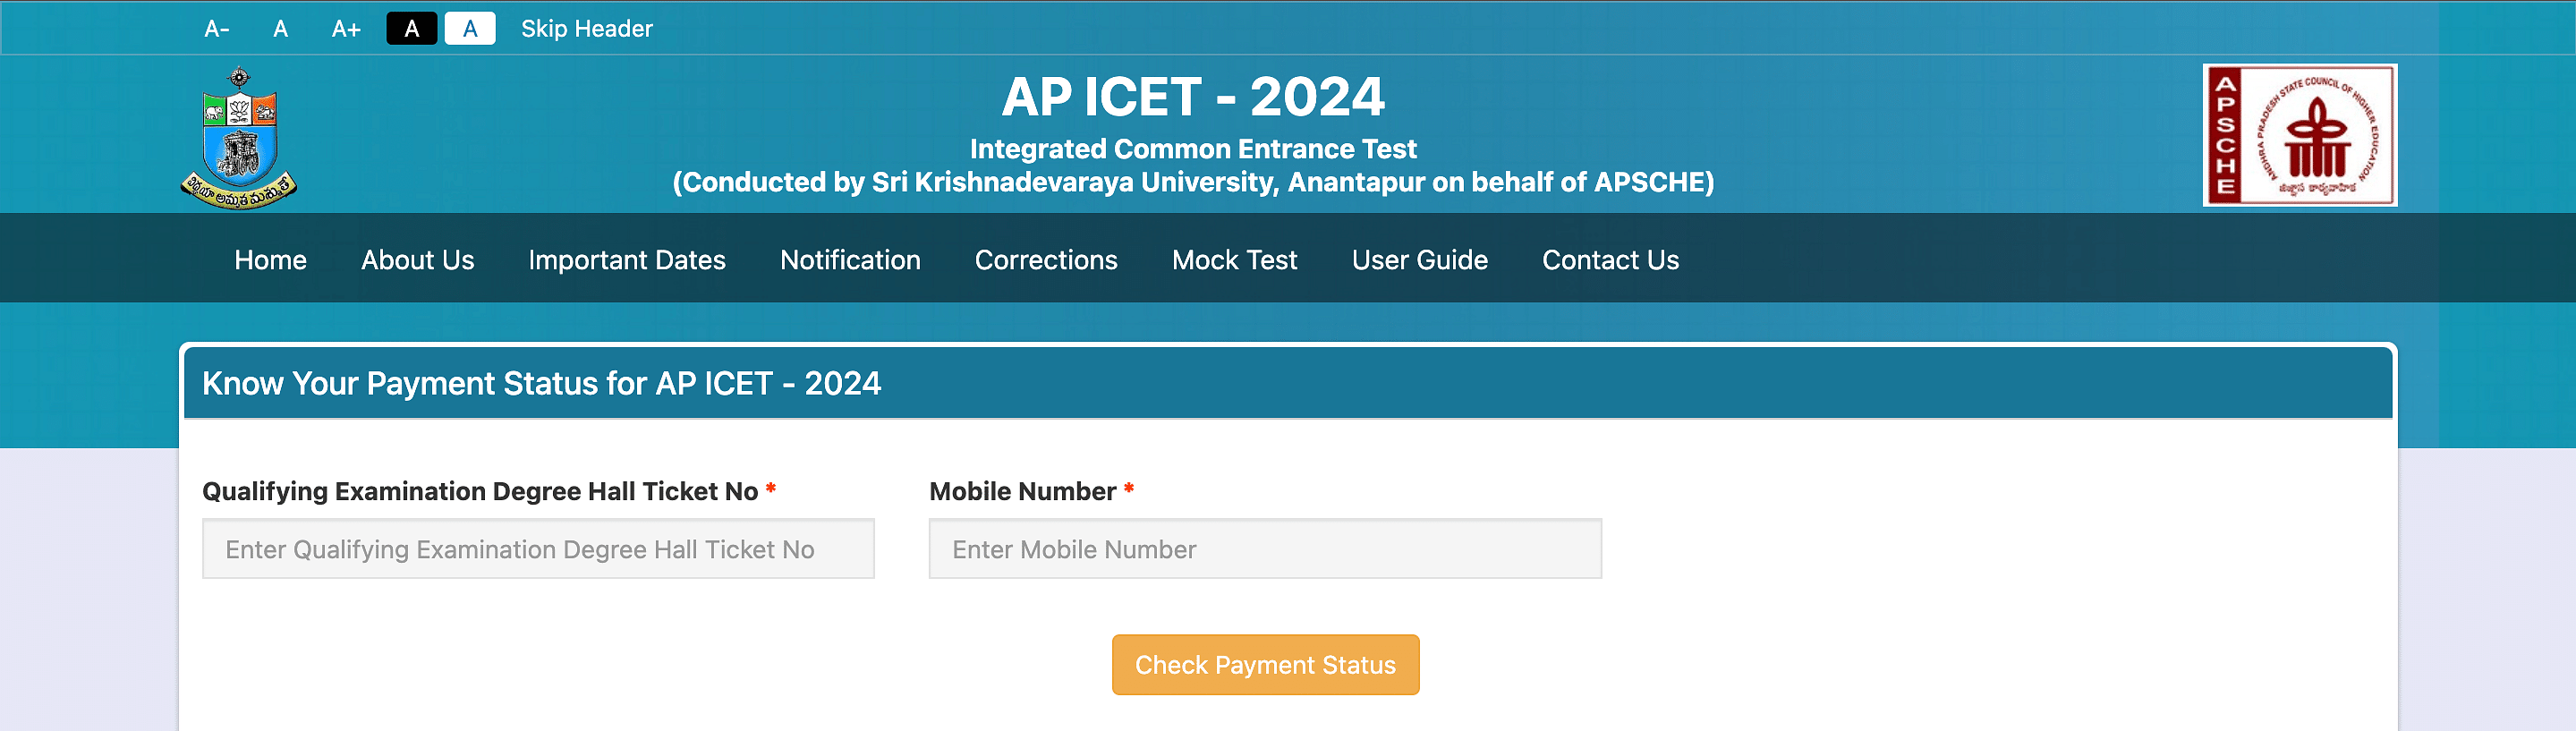 AP ICET Payment Status 2024